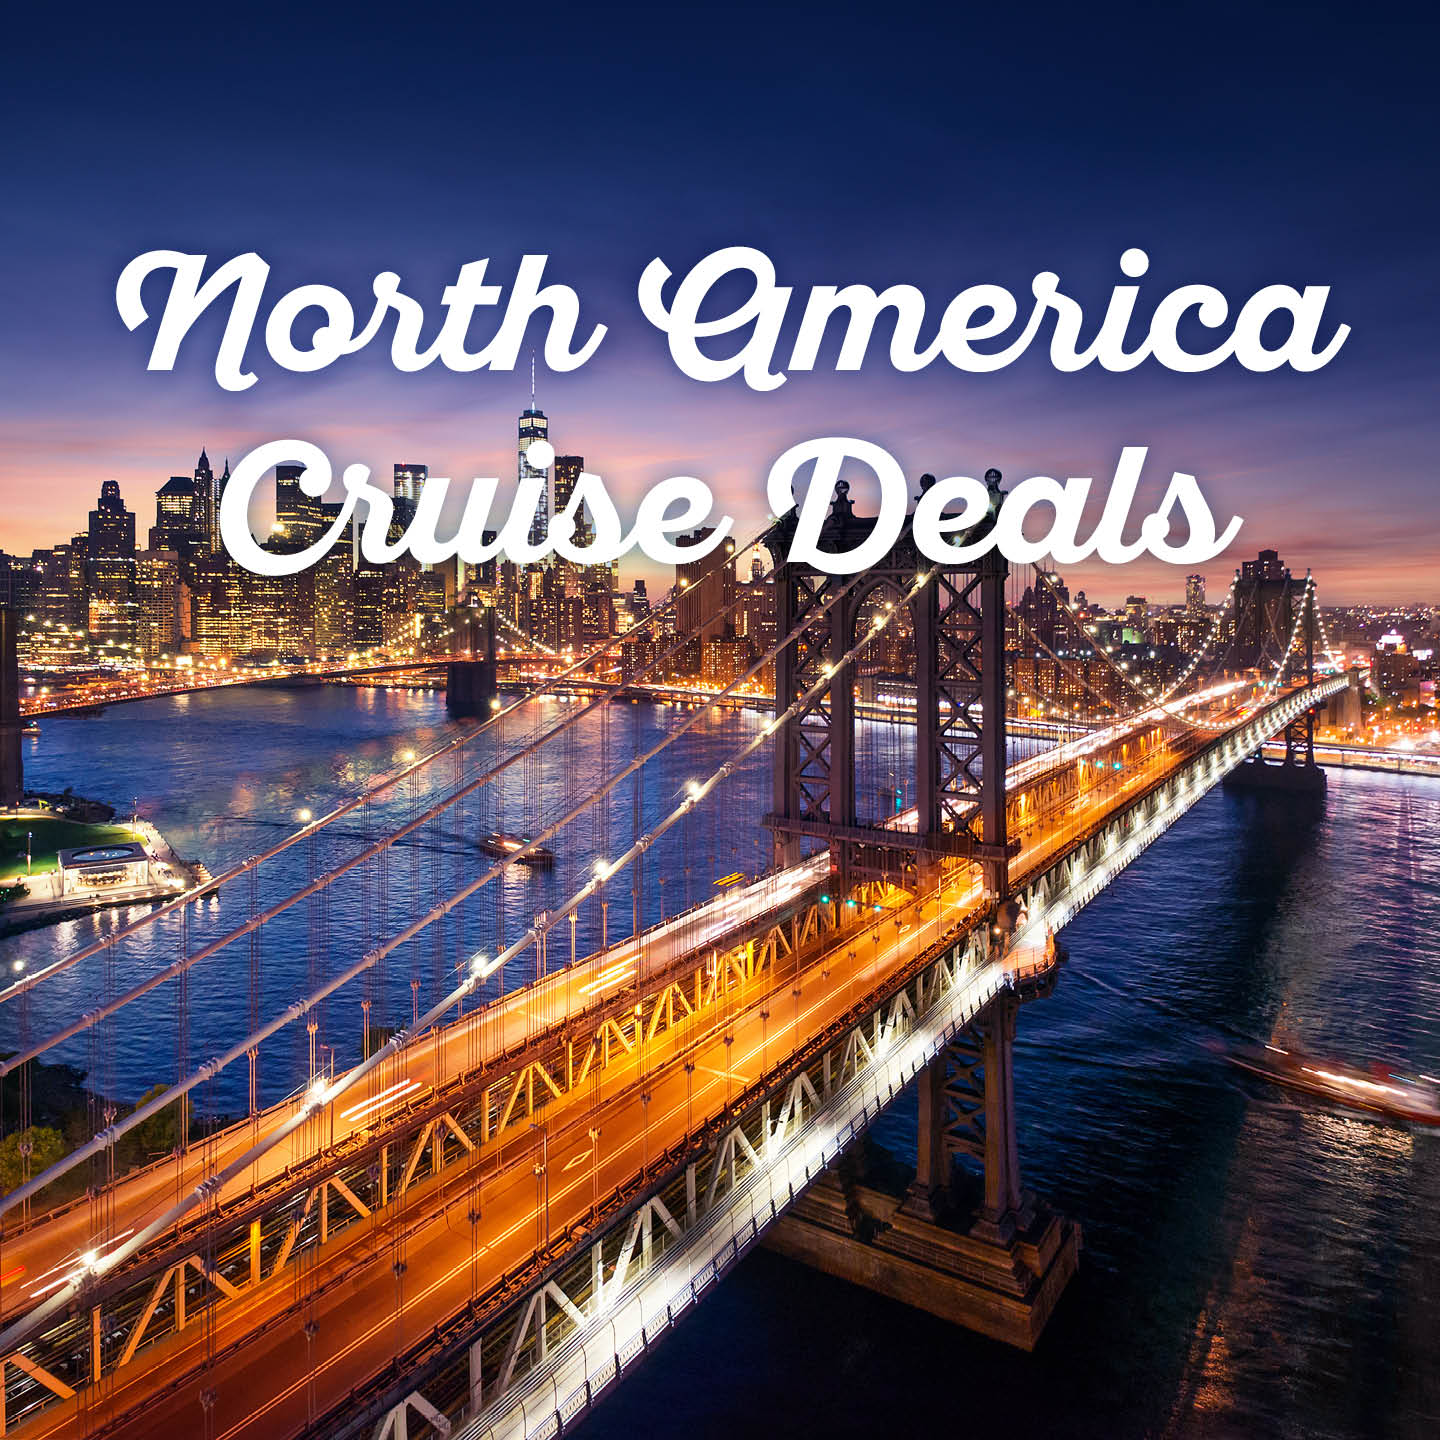 north-america-cruise-deals1-thumb.jpg